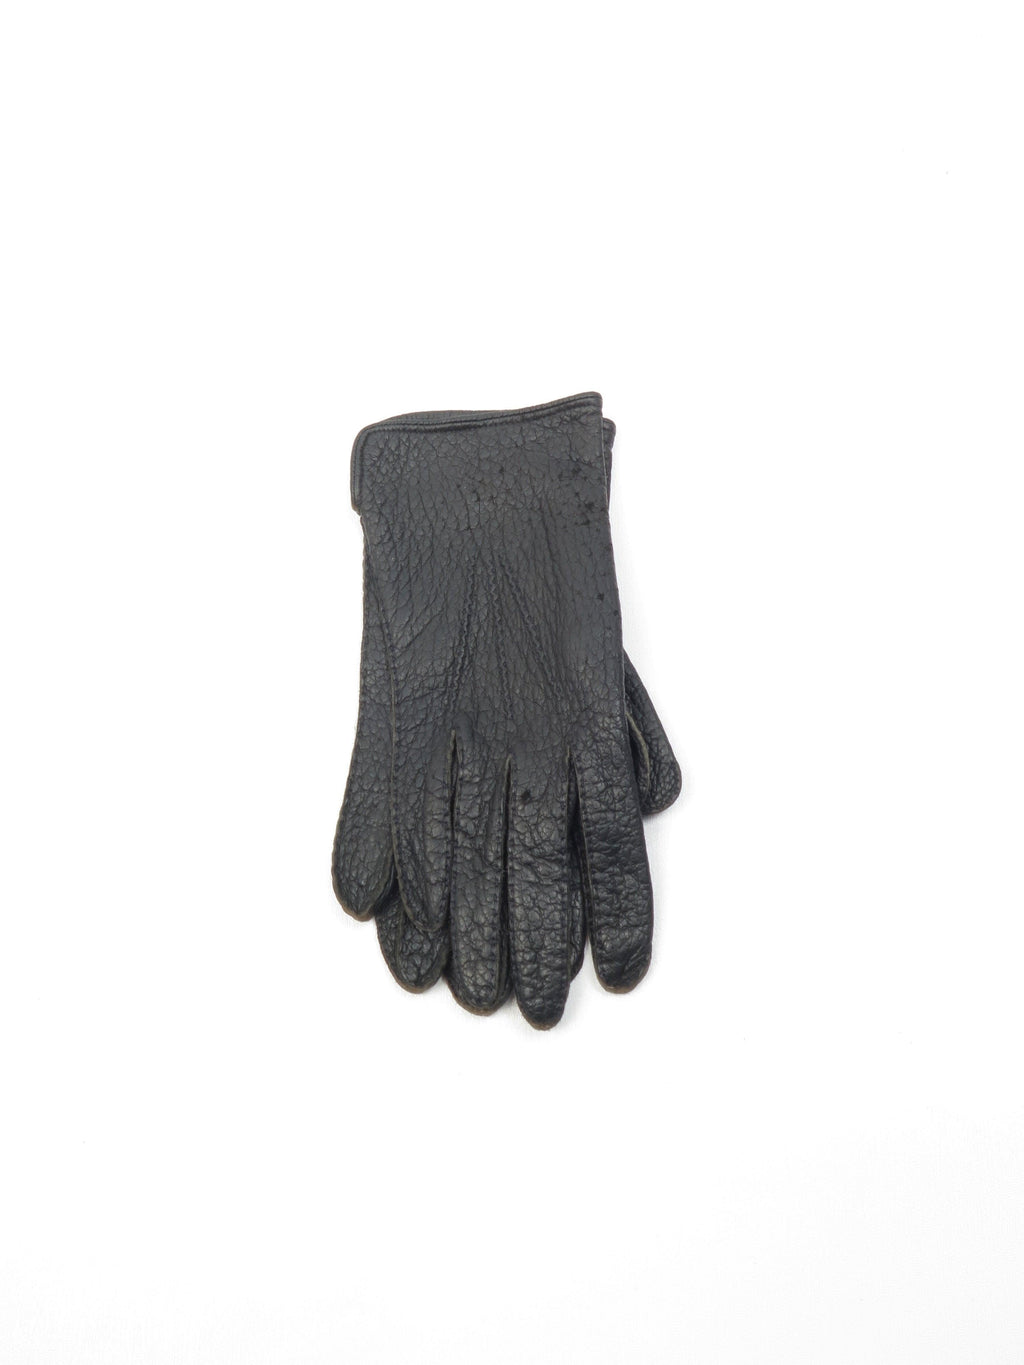 Women’s Black Leather Gloves 7.5 - The Harlequin